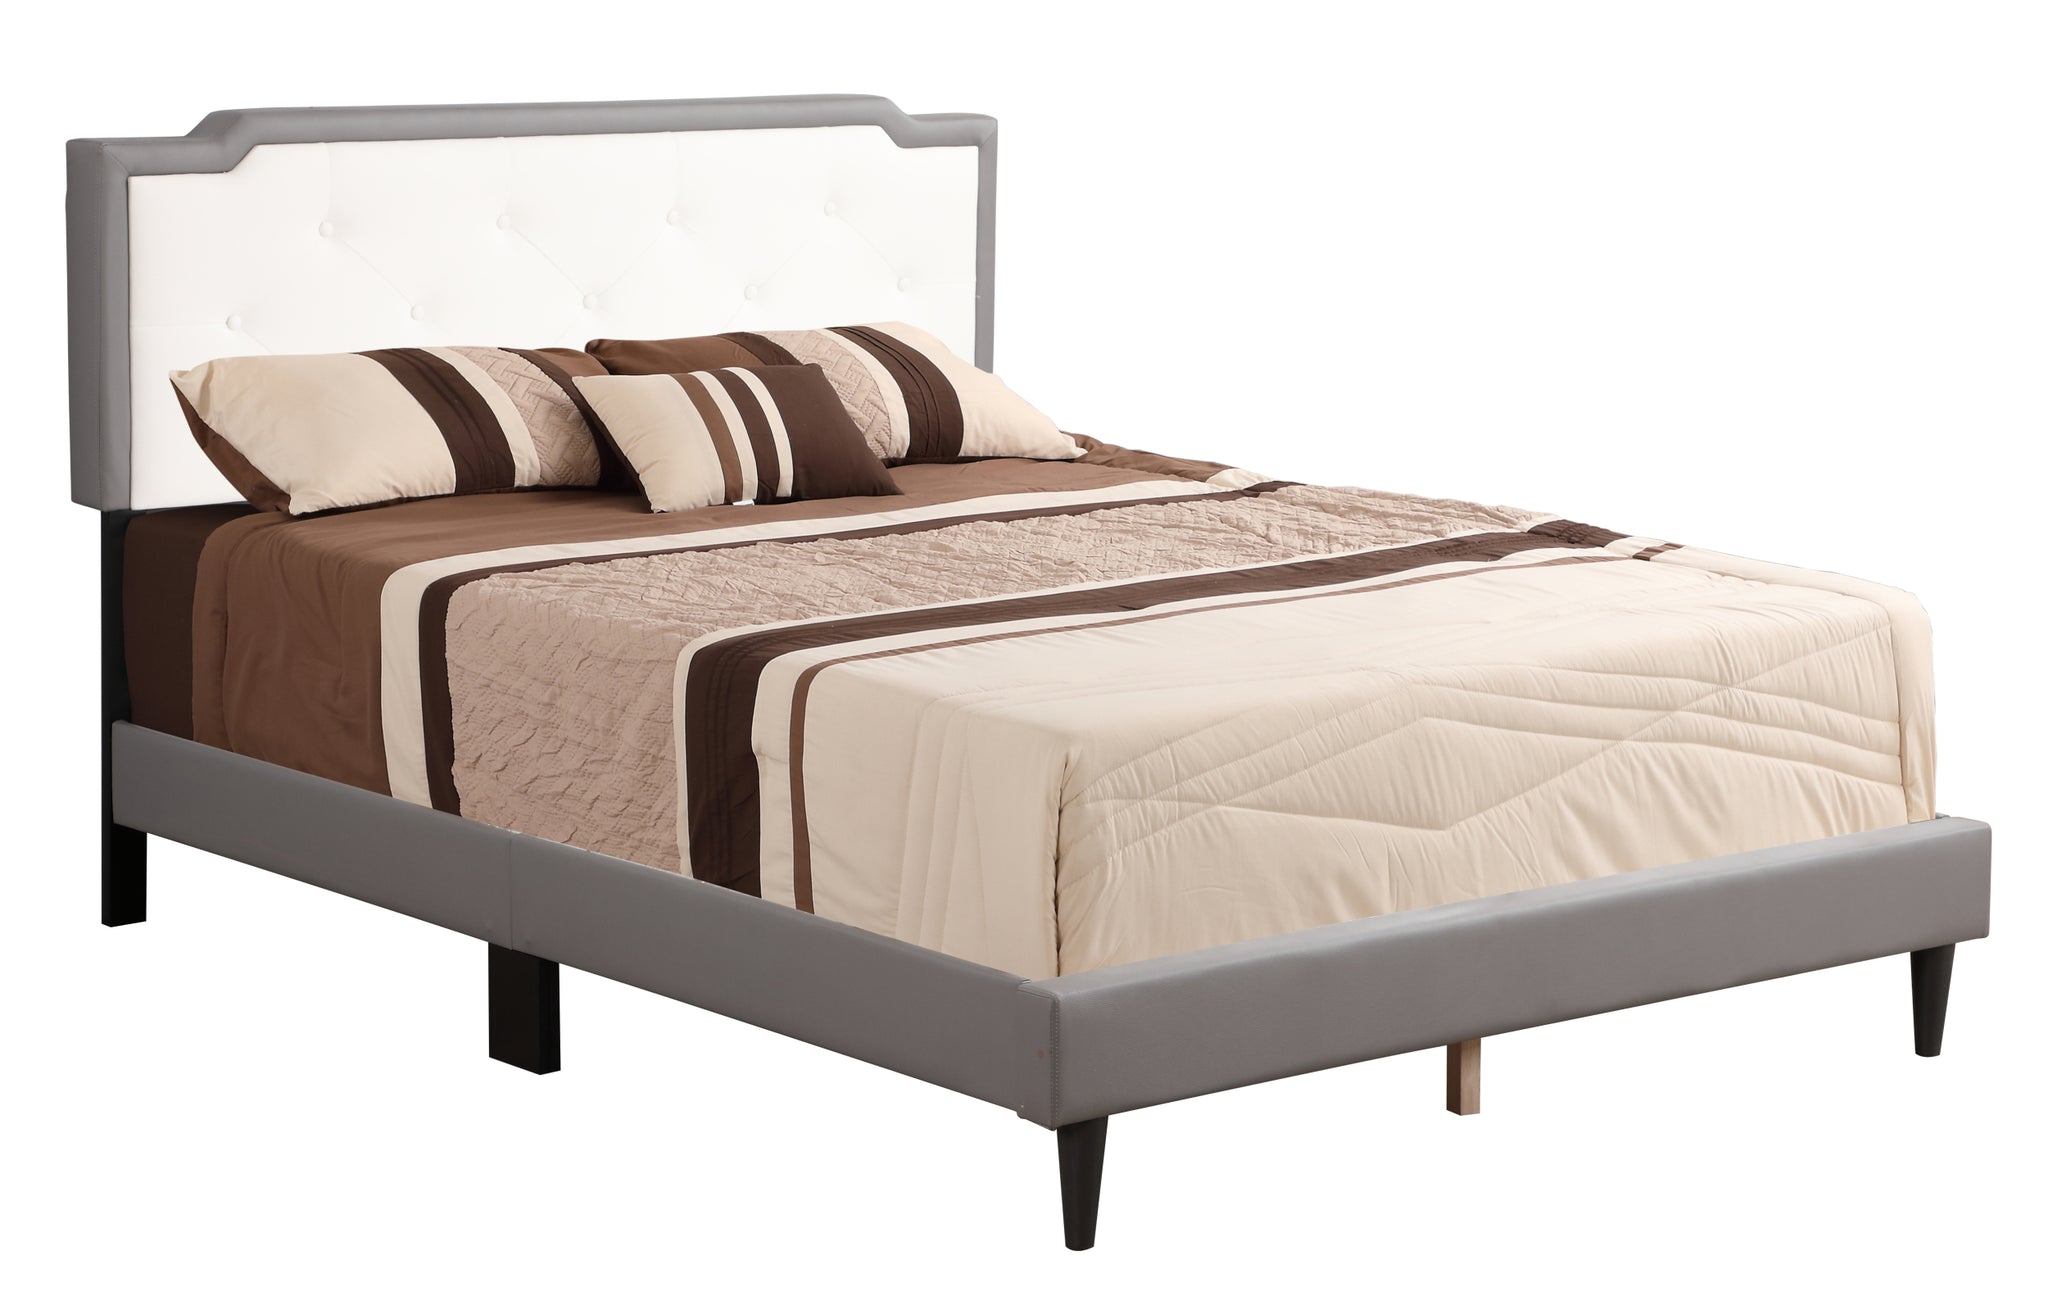 Deb G1121 FB UP Full Bed All in One light grey-foam-pu